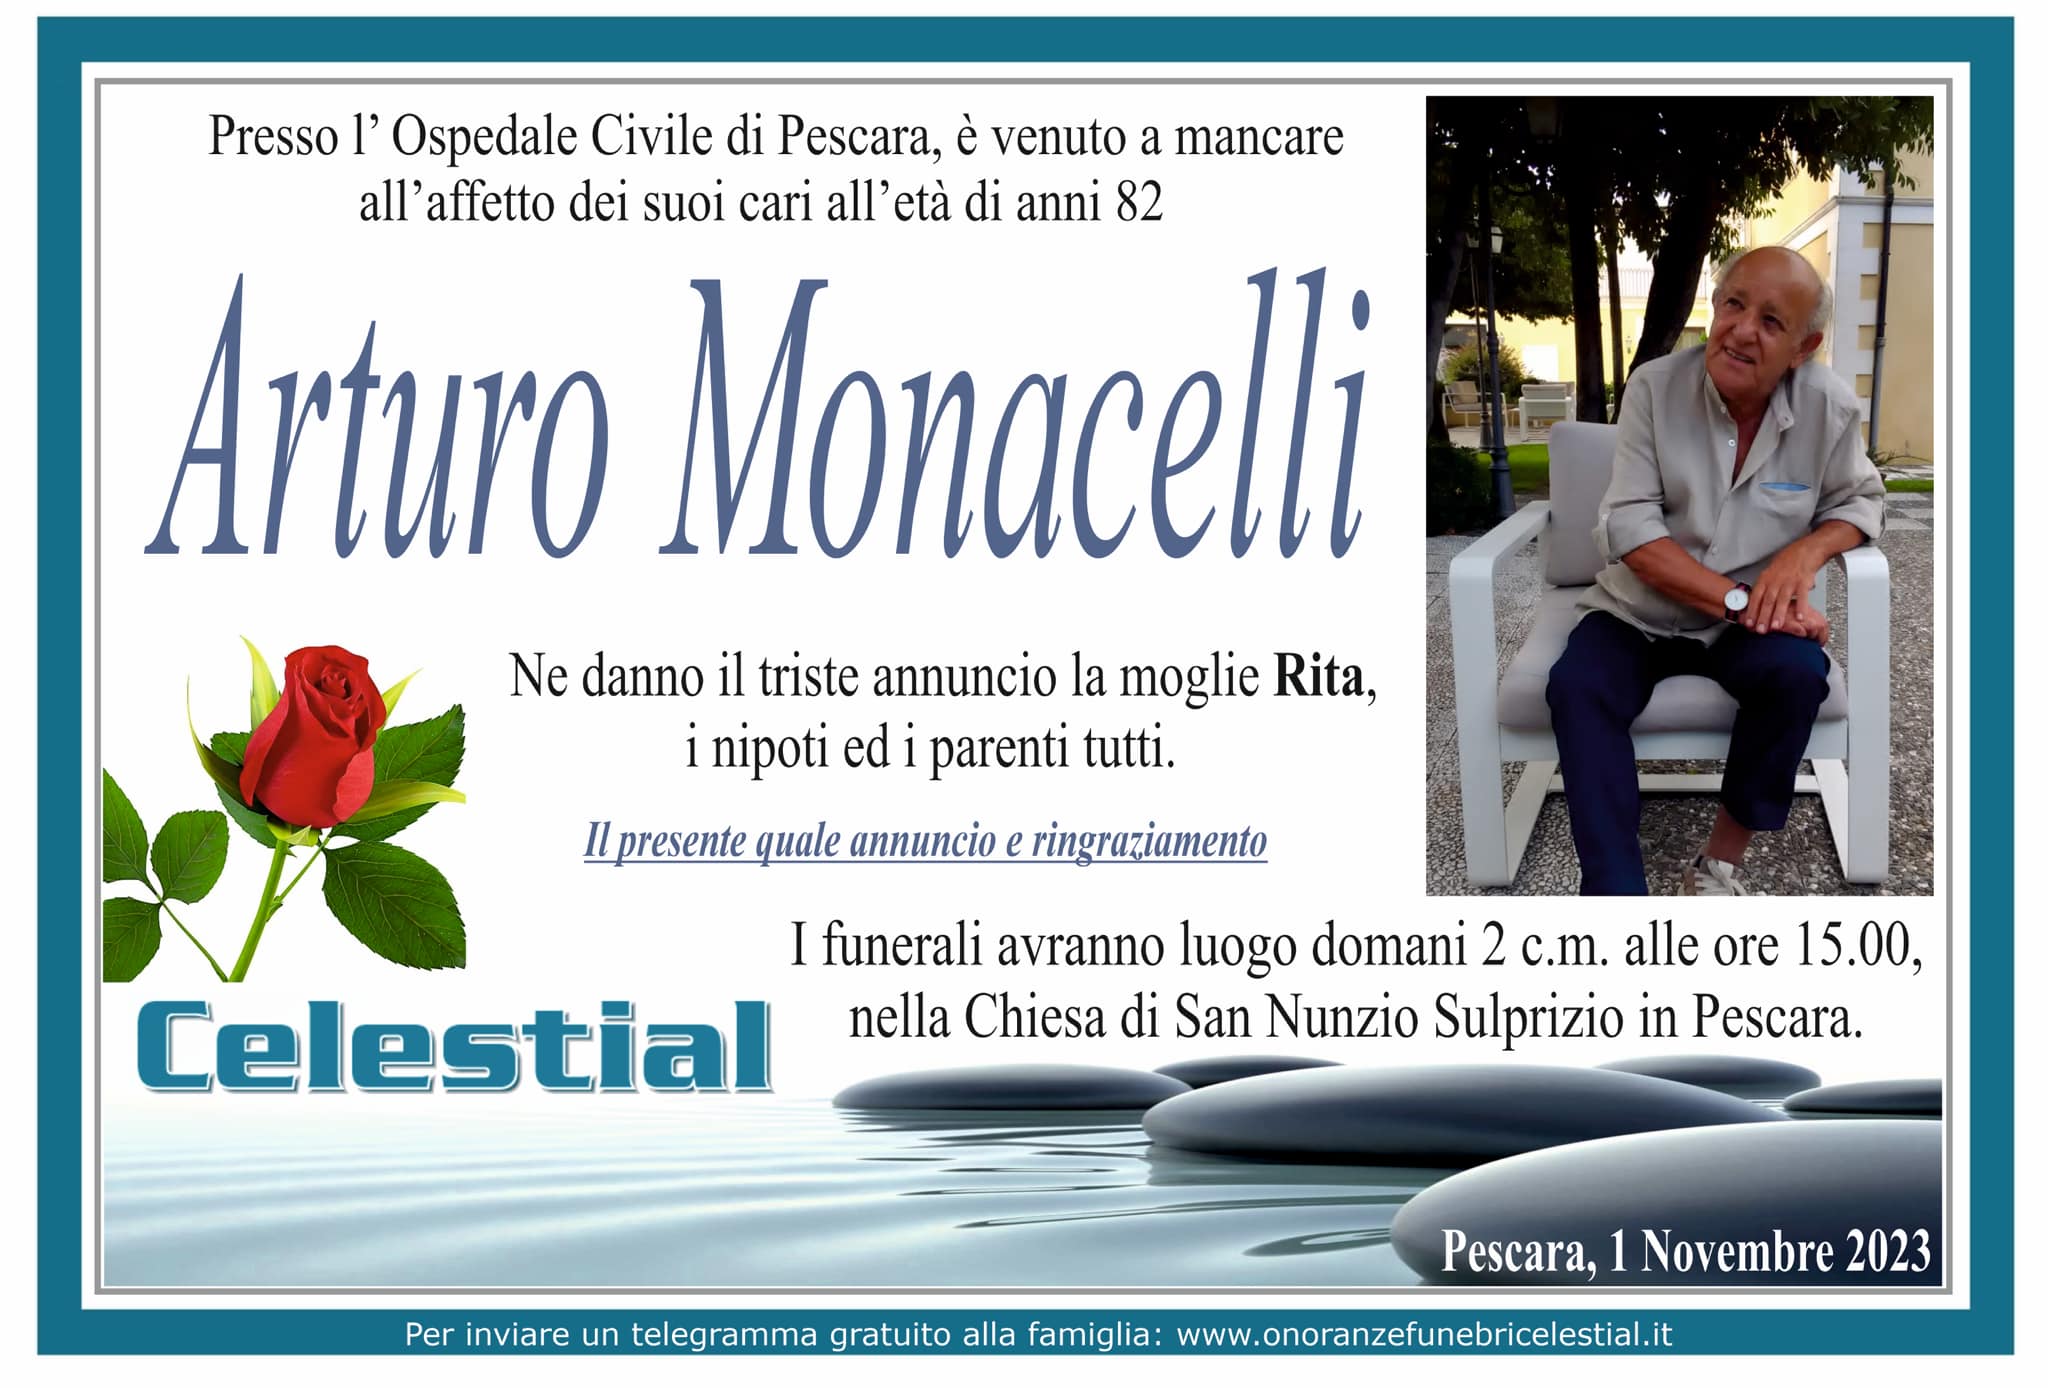 Arturo Monacelli